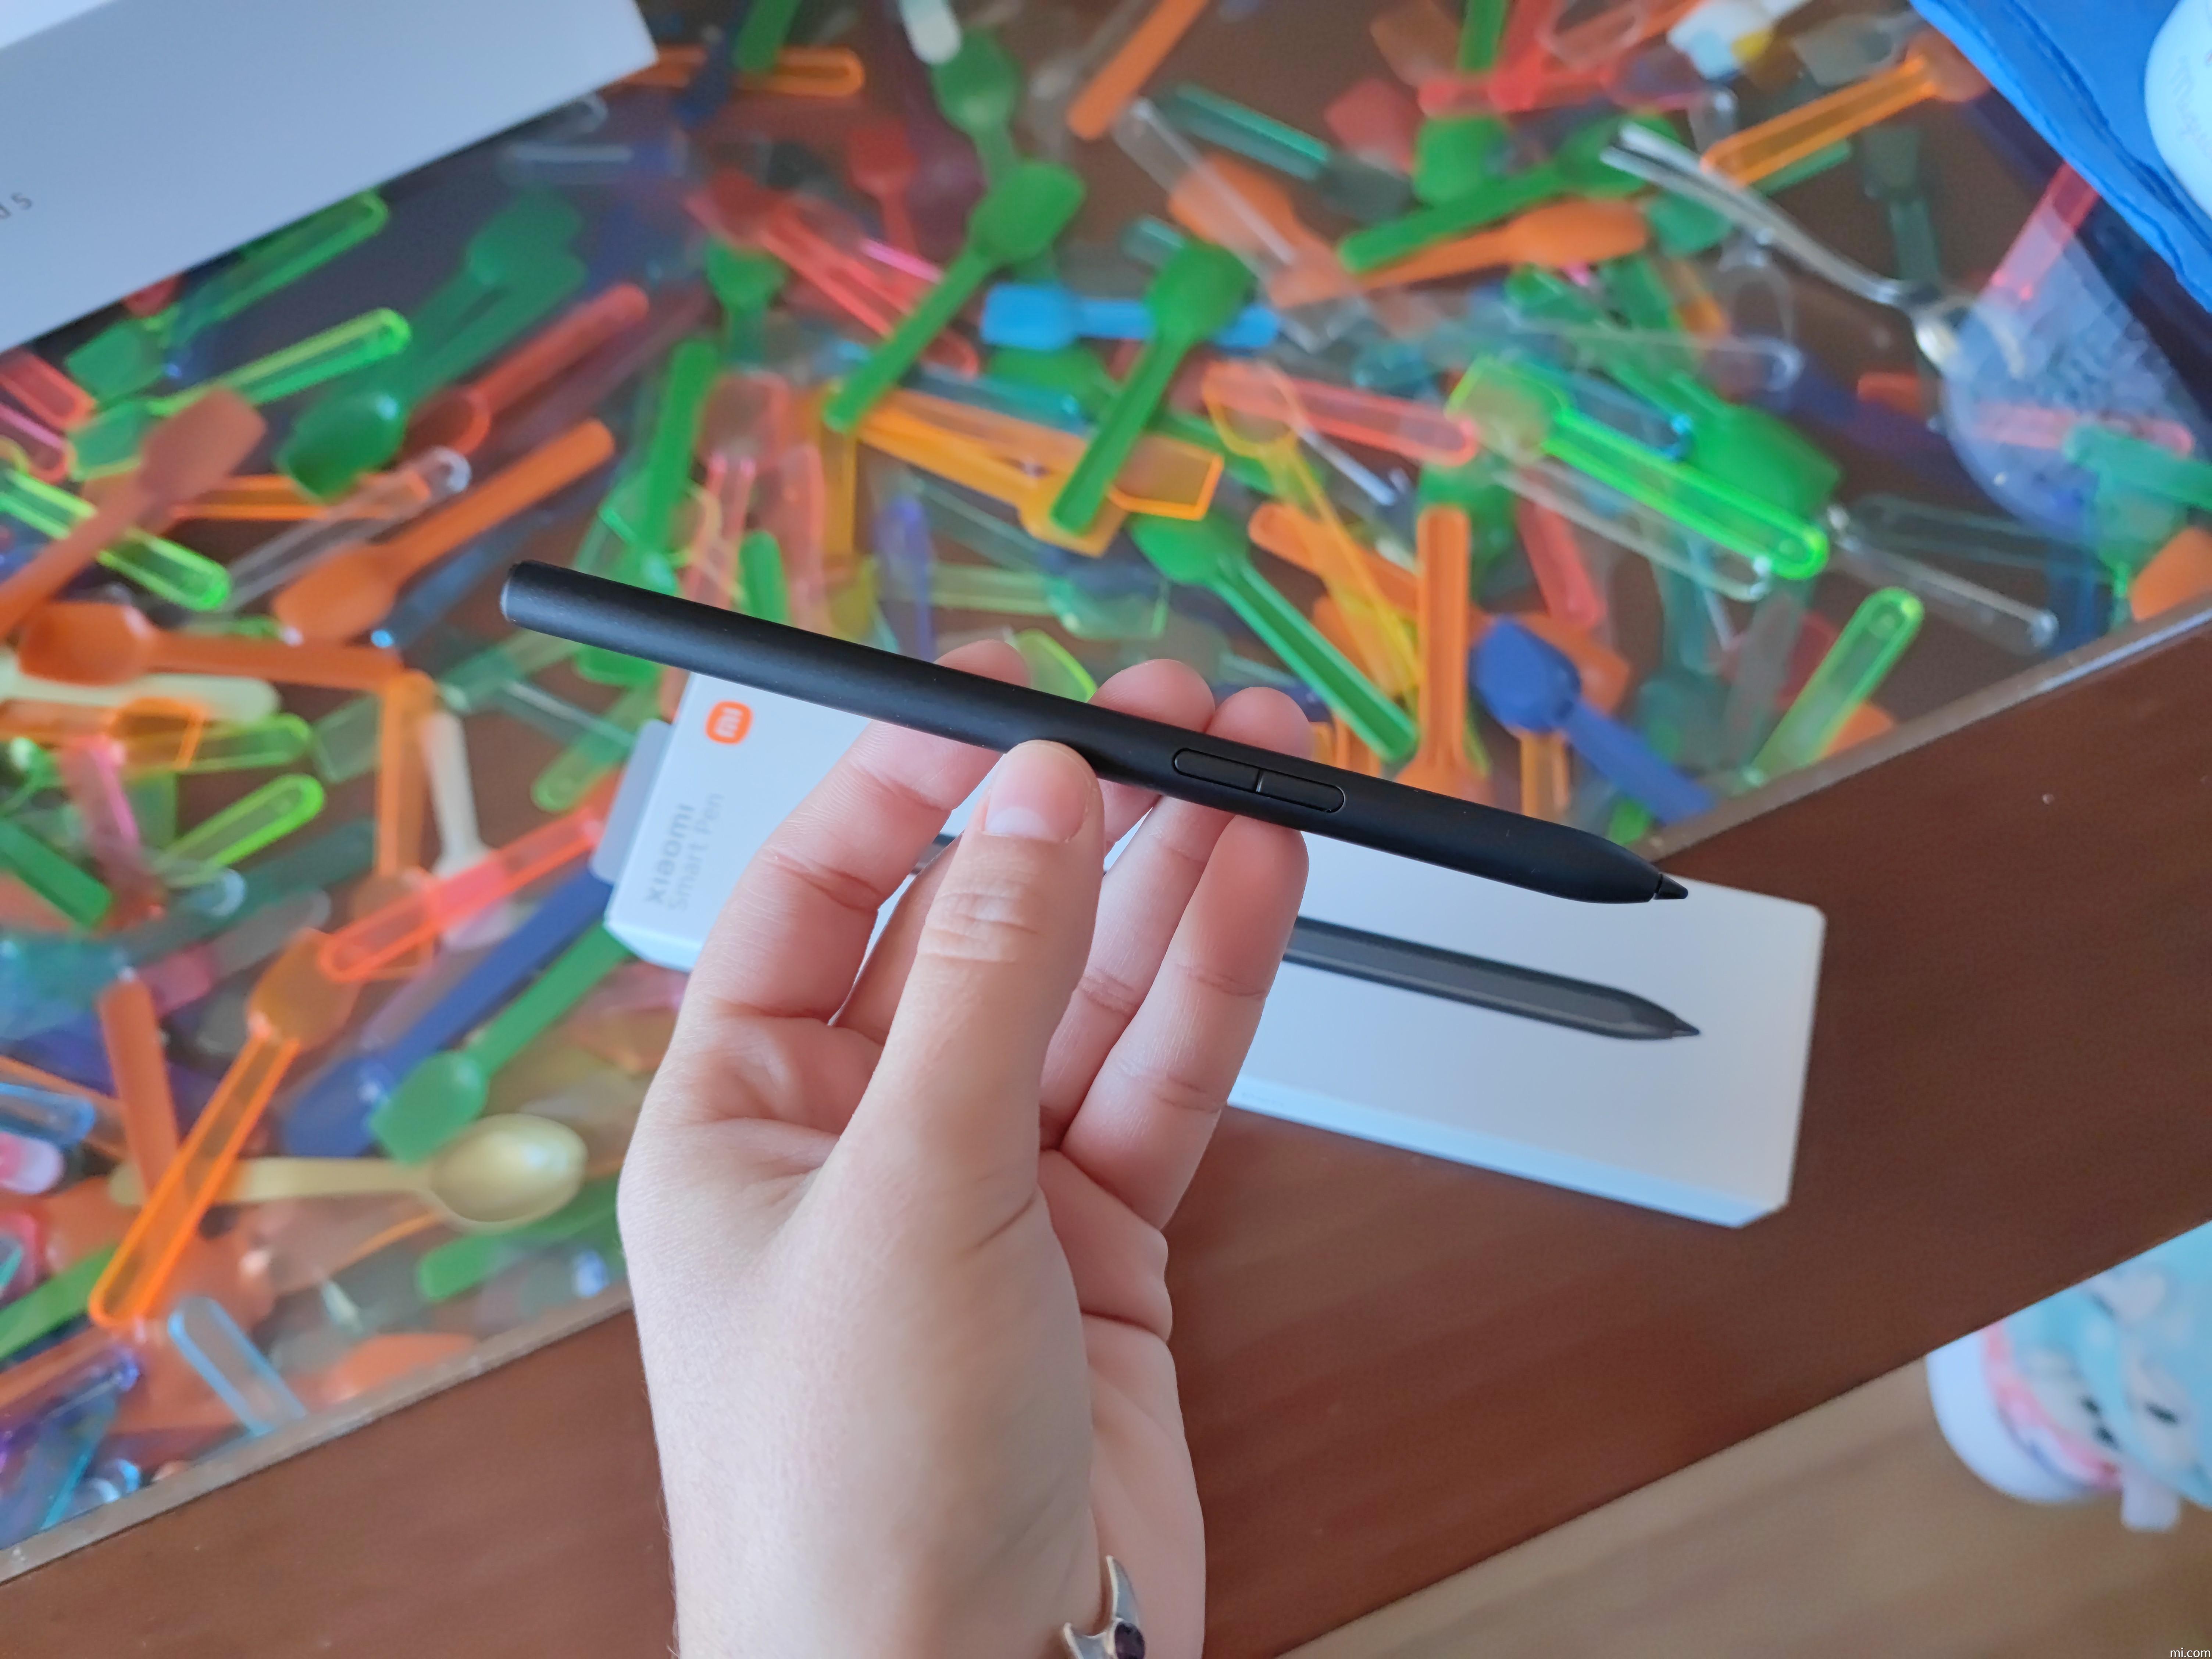 Xiaomi Smart Pen - Stylet - Zwart